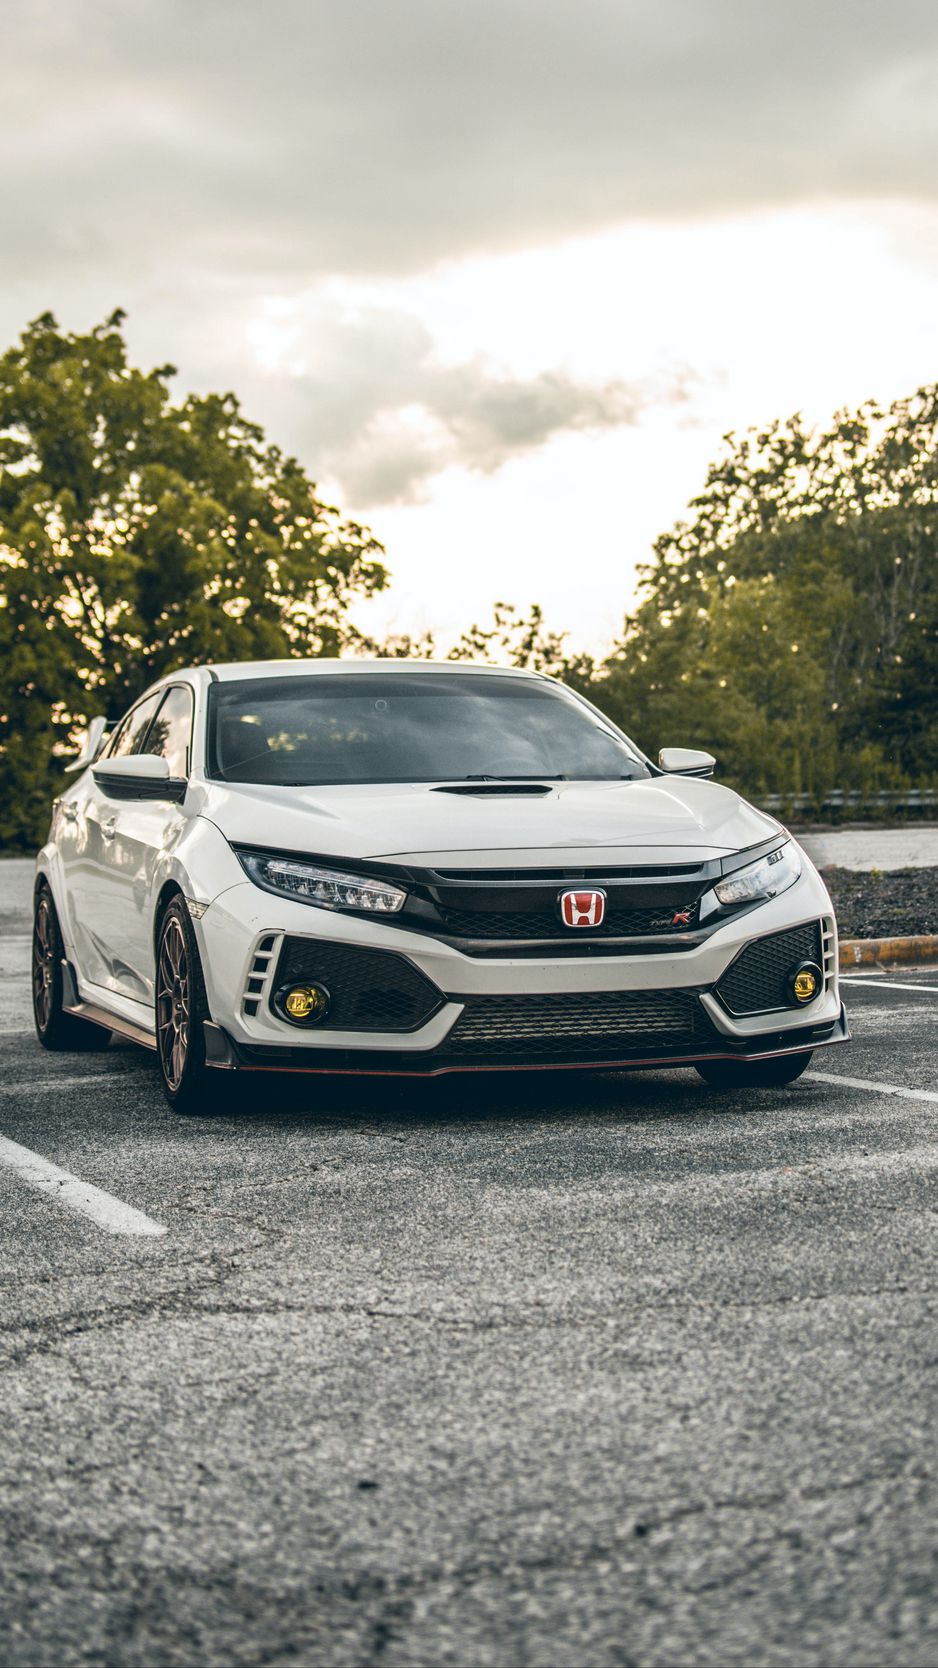 Honda Civic Type R (2018) long-term review